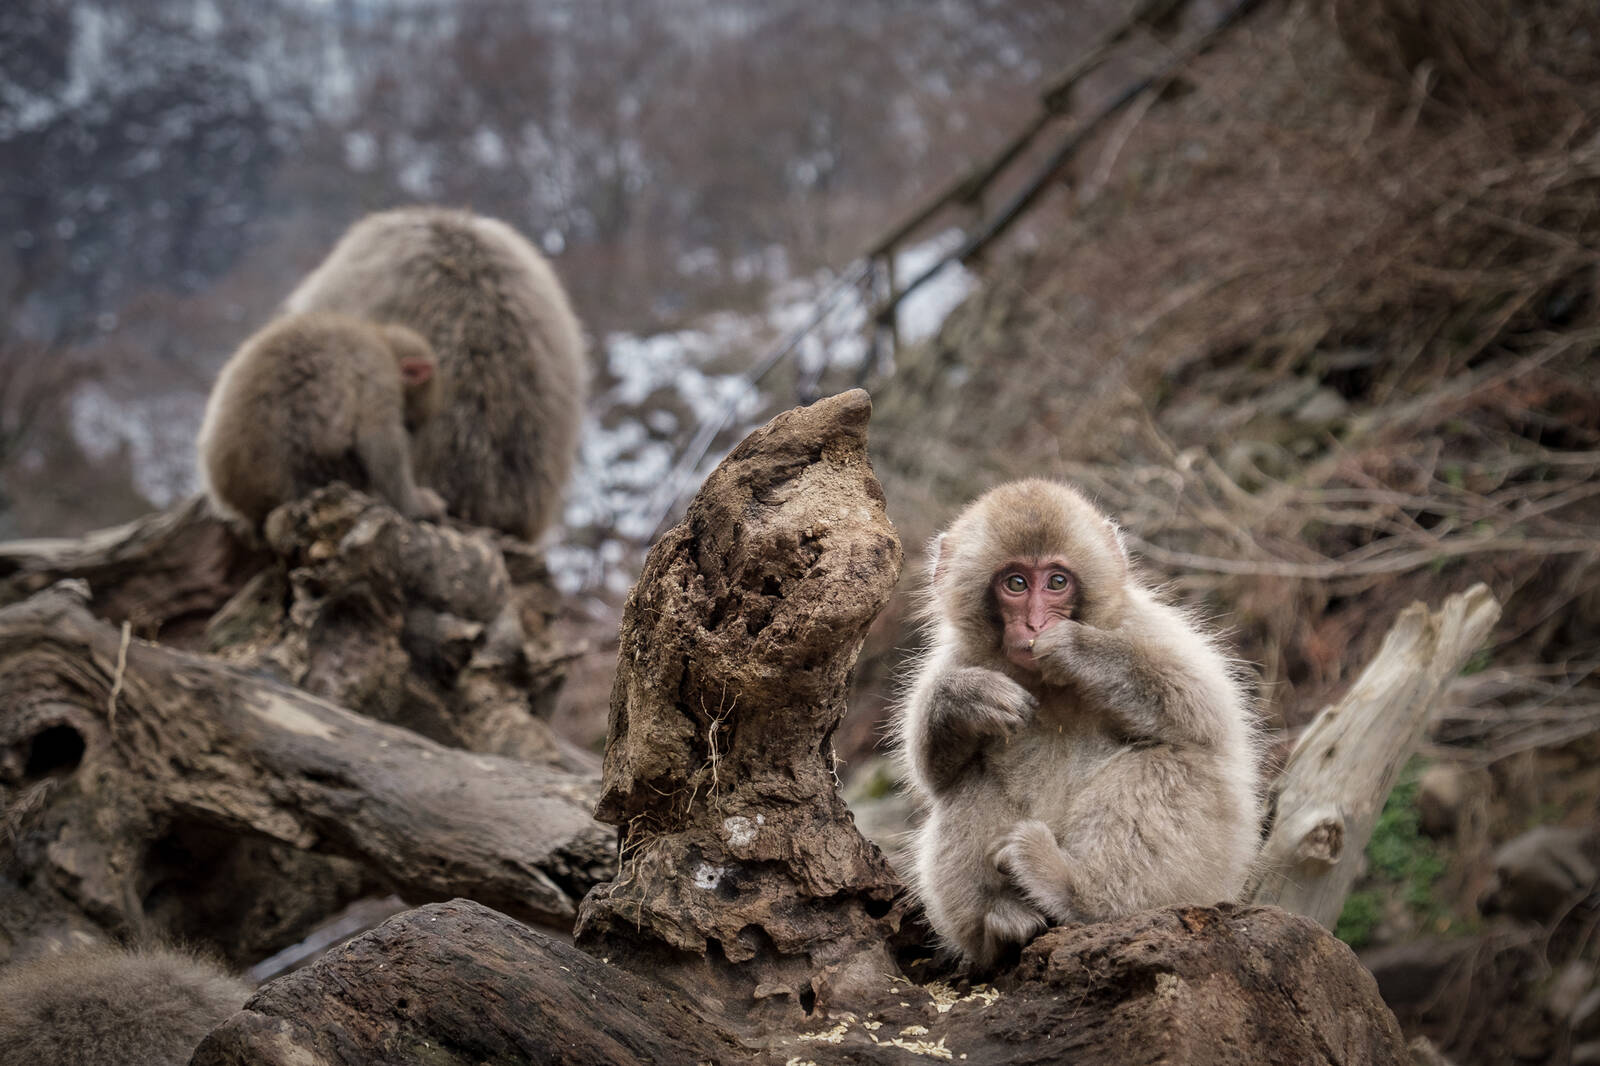 Image of Jigokudani Monkey Park by Darlene Hildebrandt